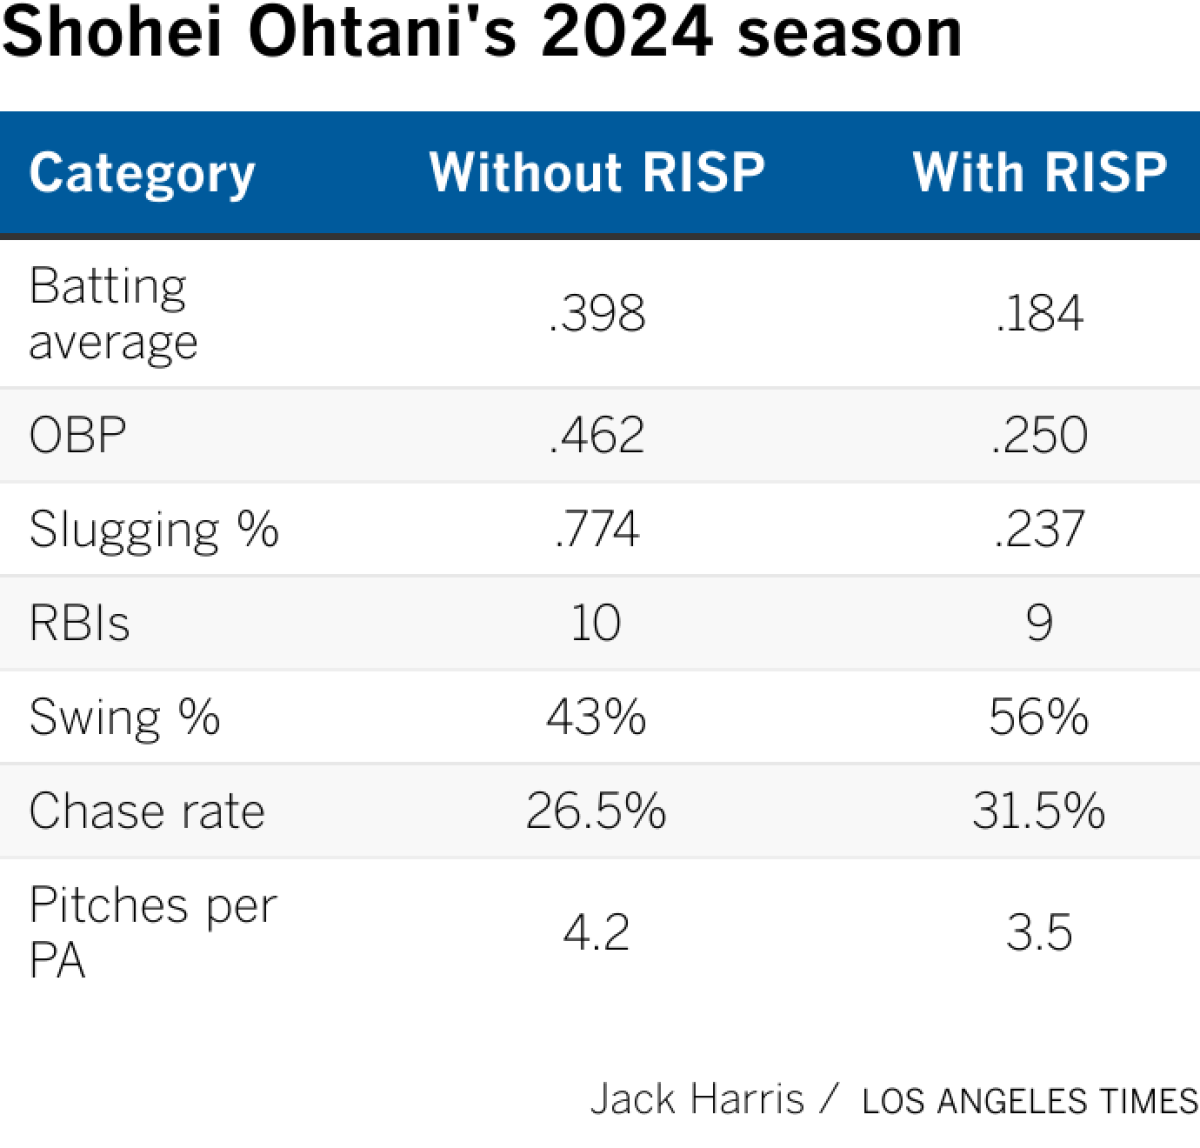 Shohei Ohtani's 2024 season